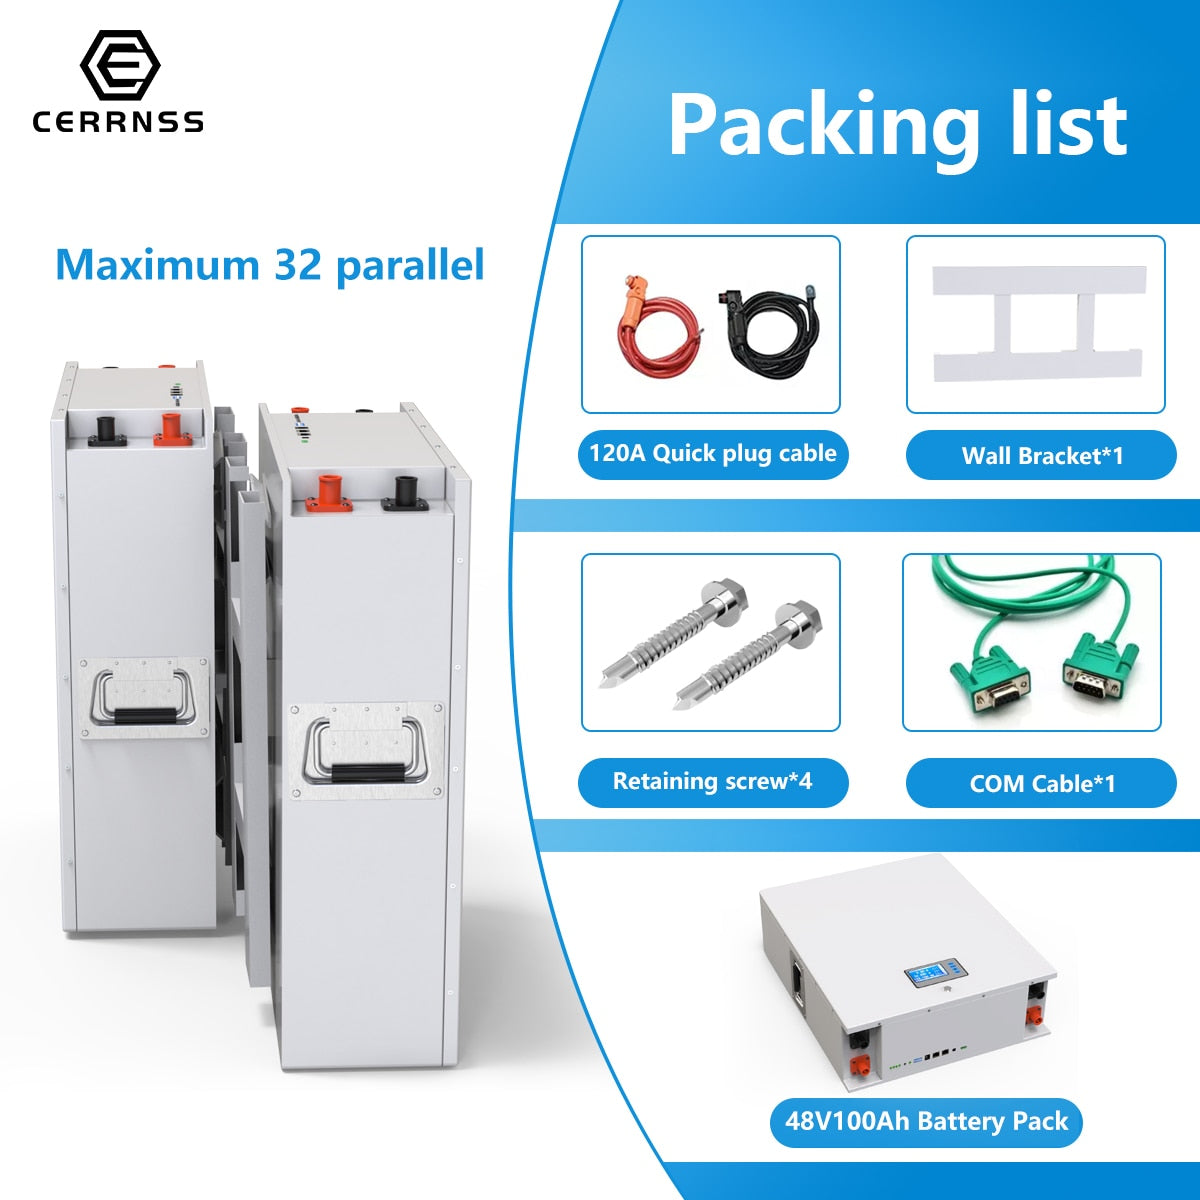 CeRRNSS Packing list Maximum 32 parallel b0 120